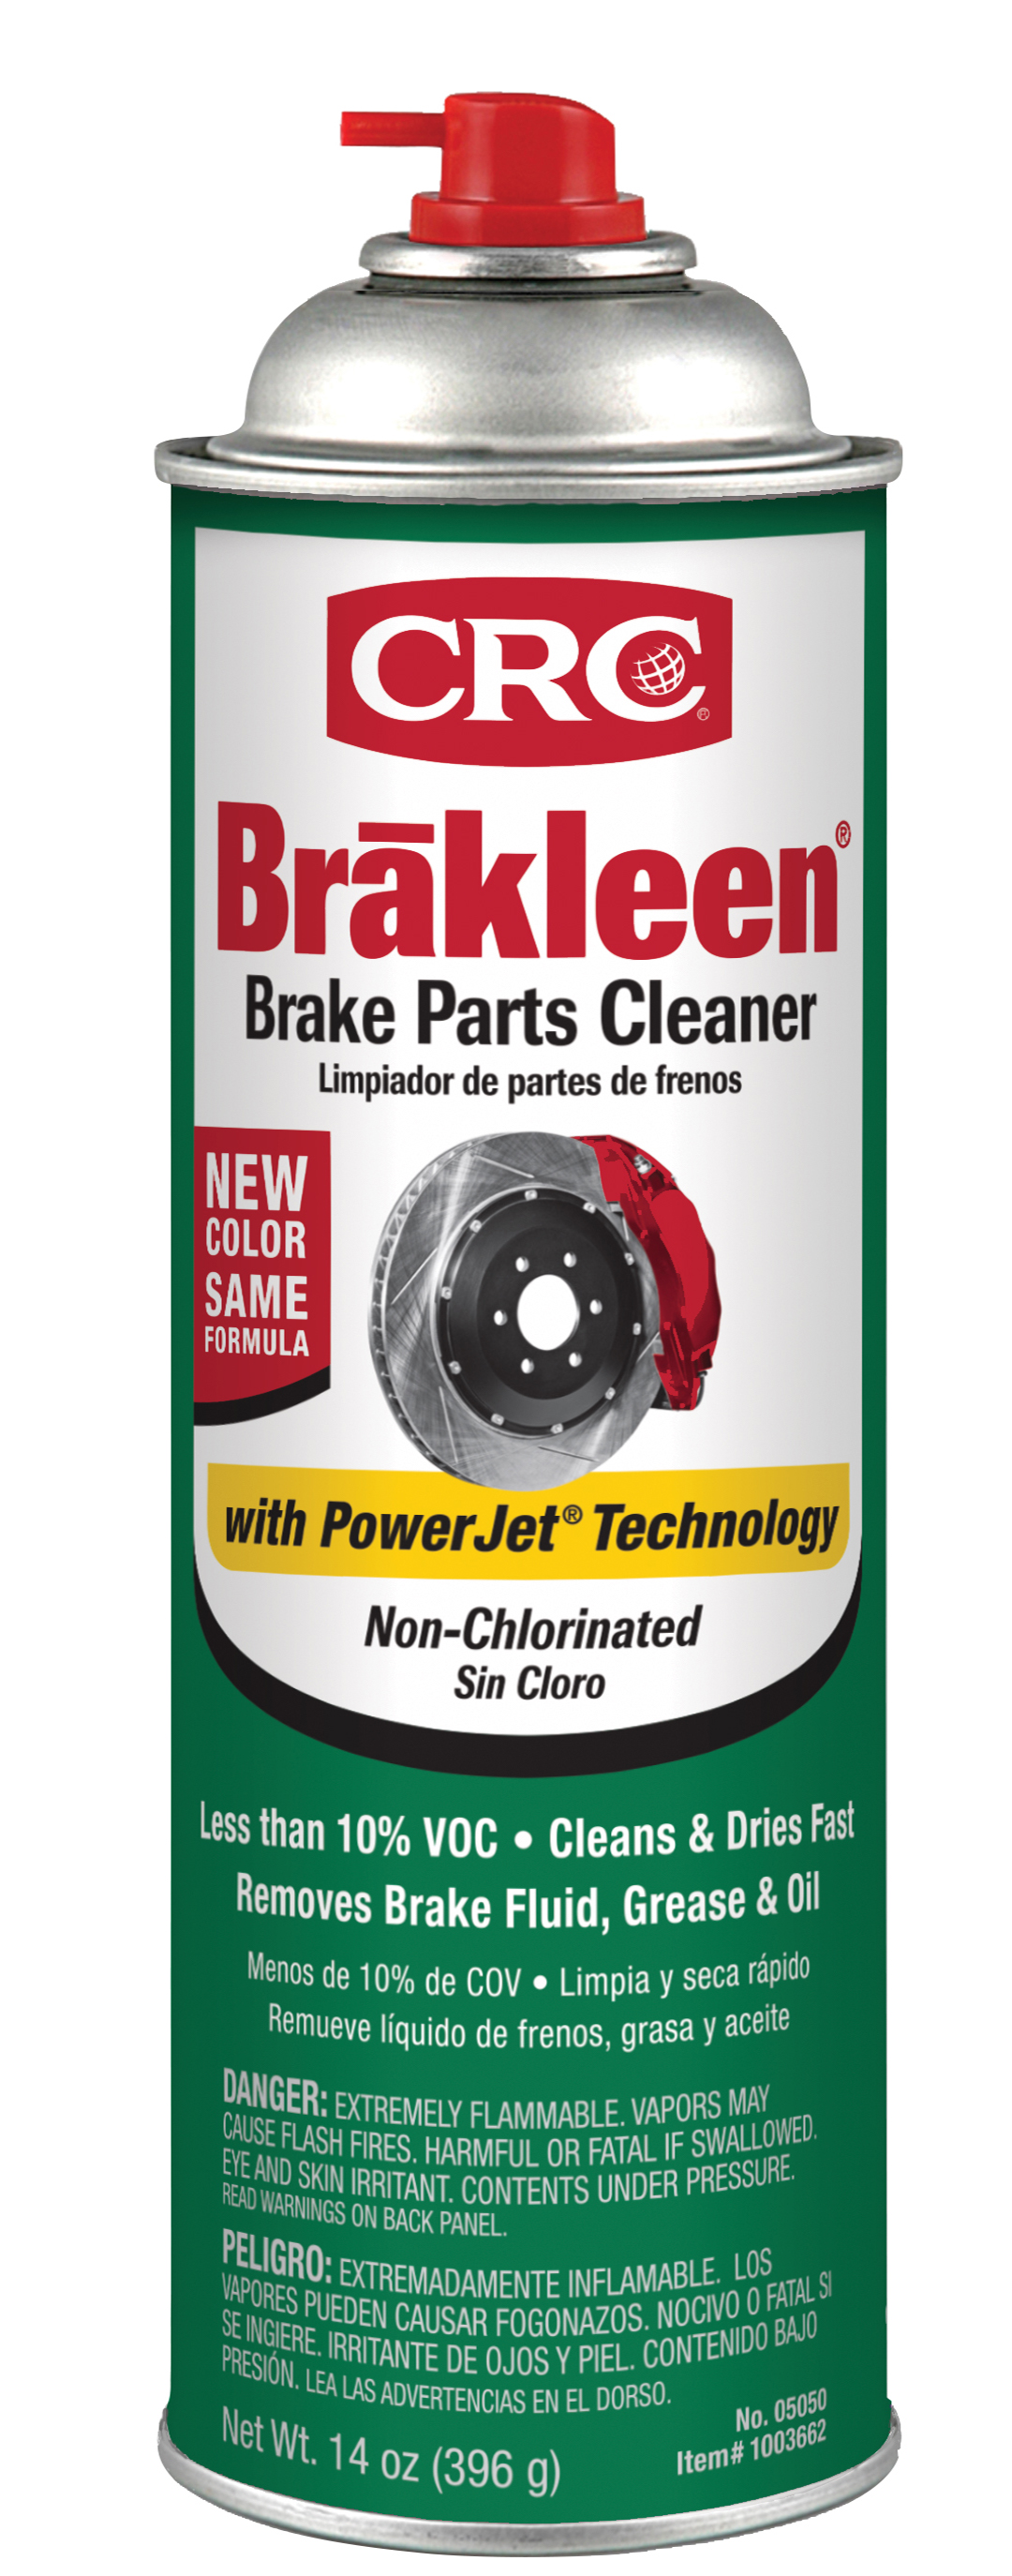 Brakleen Non-Flammable Brake Parts Cleaner